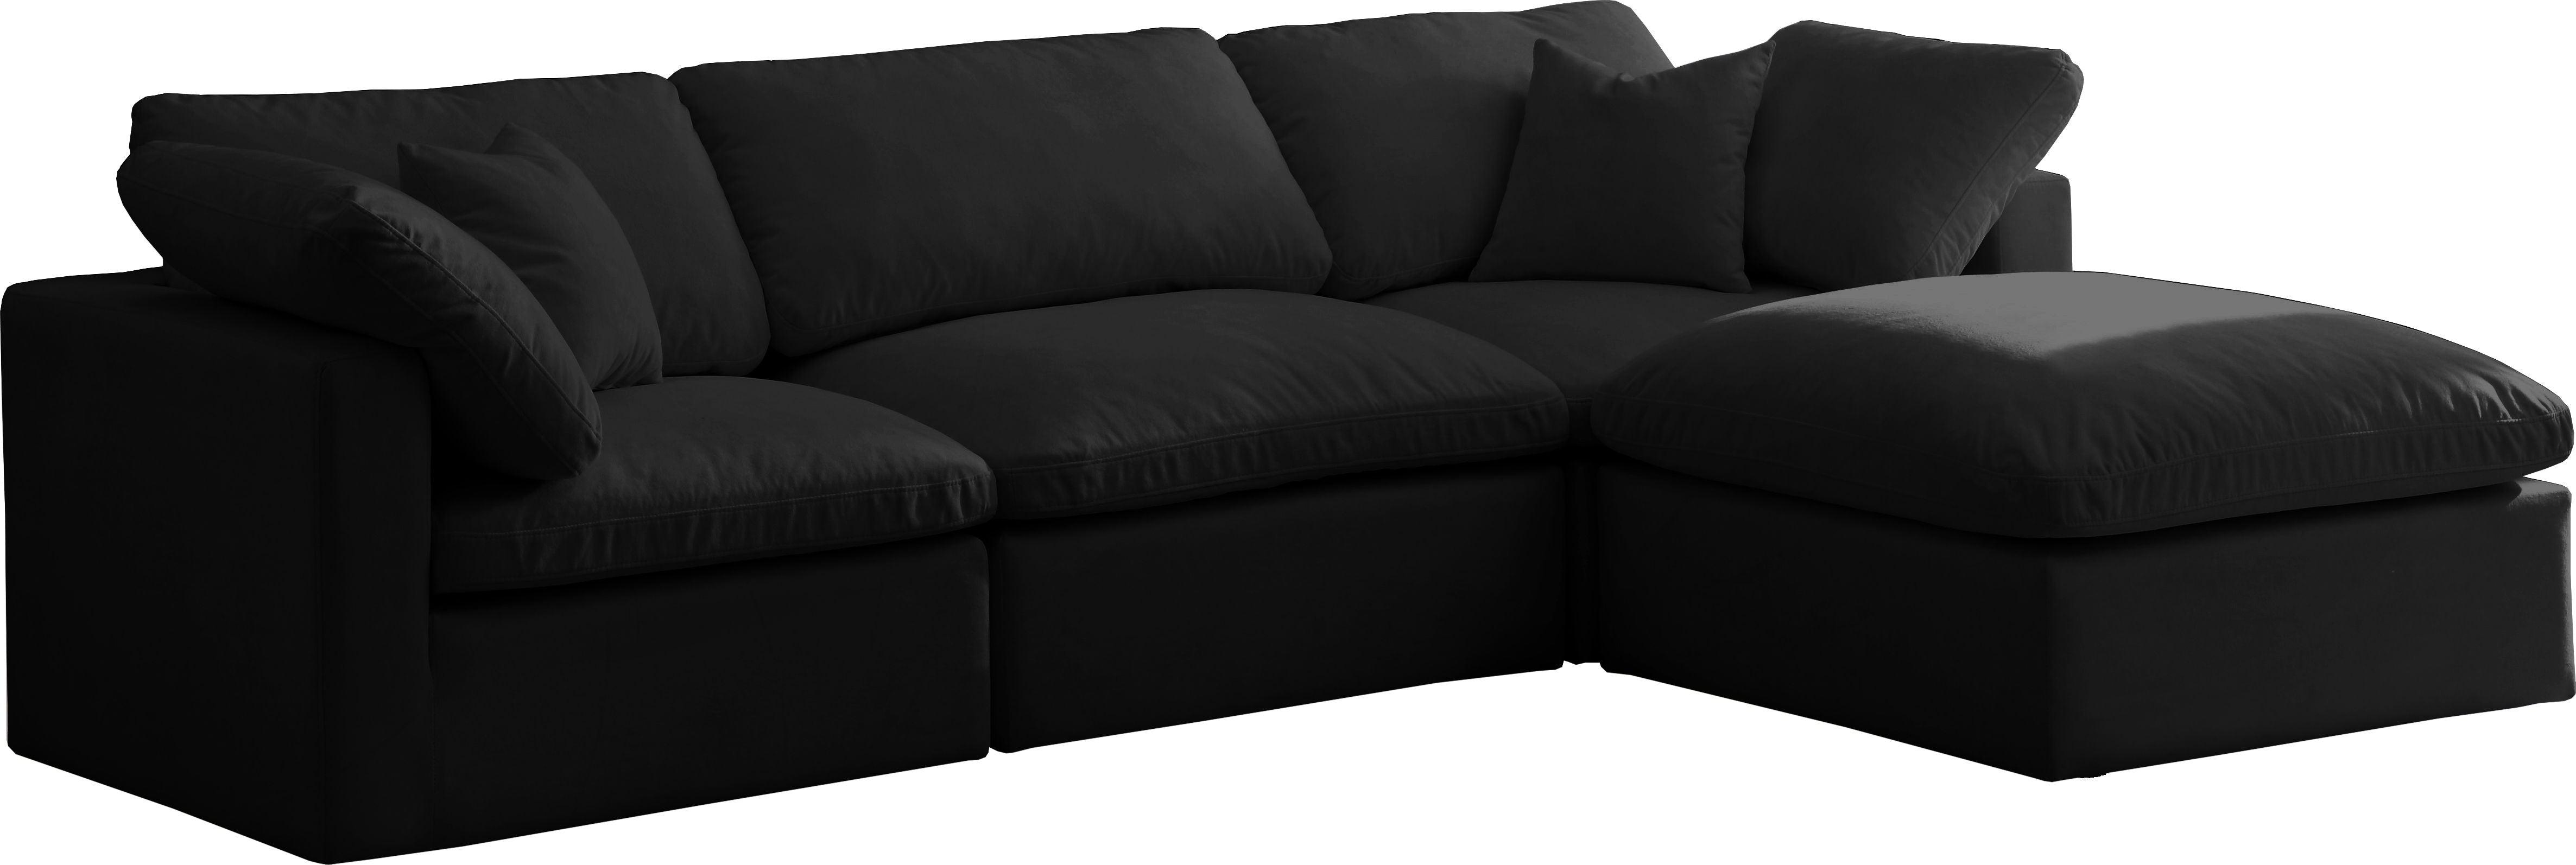 Meridian Furniture - Plush - Velvet Standard Comfort Modular Sectional - Black - 5th Avenue Furniture